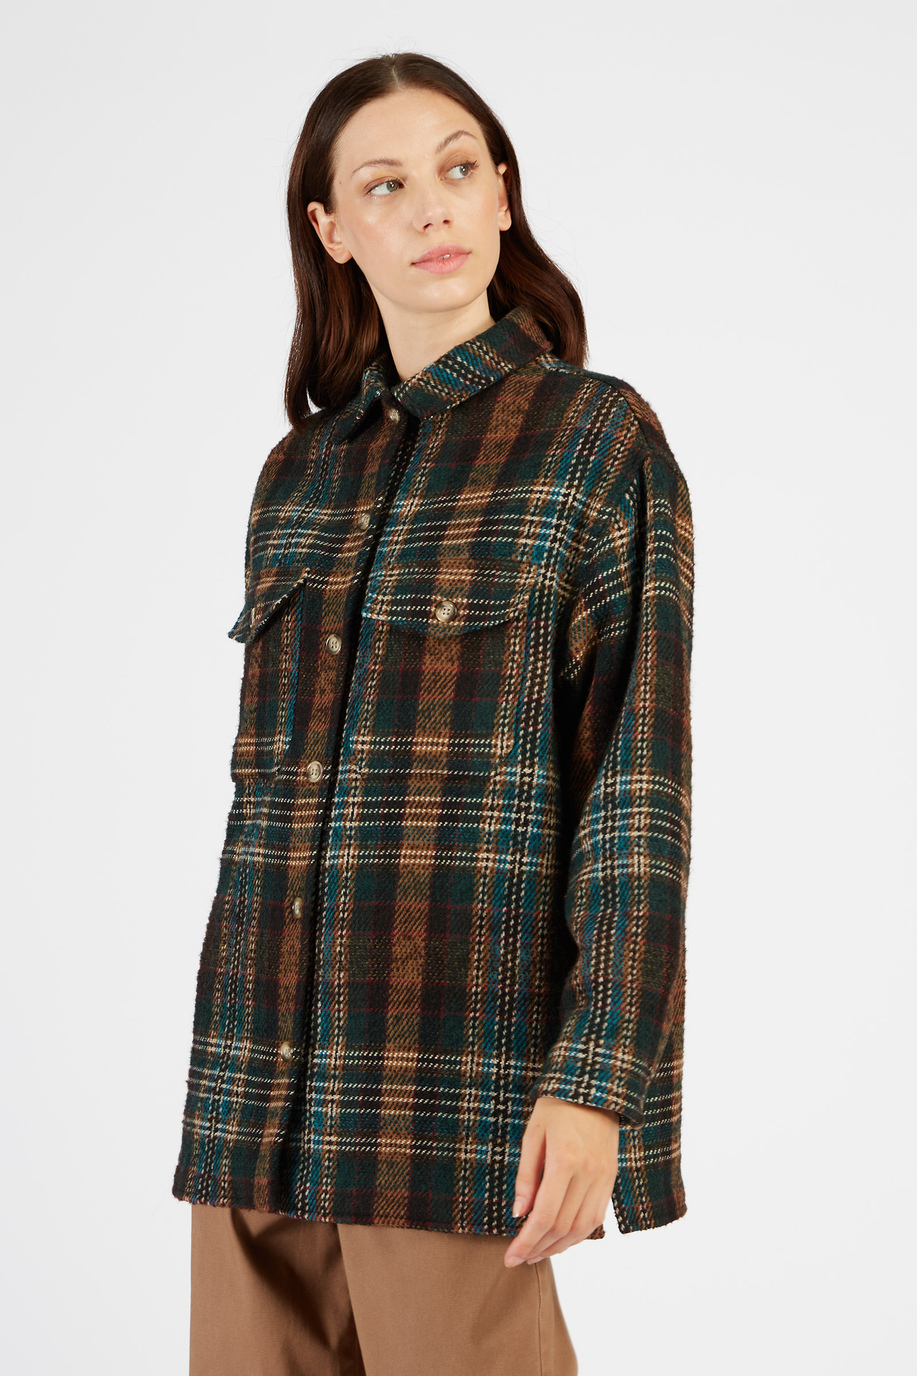 Women’s wool jacket long sleeves checked pattern regular fit - New Arrivals Women | La Martina - Official Online Shop